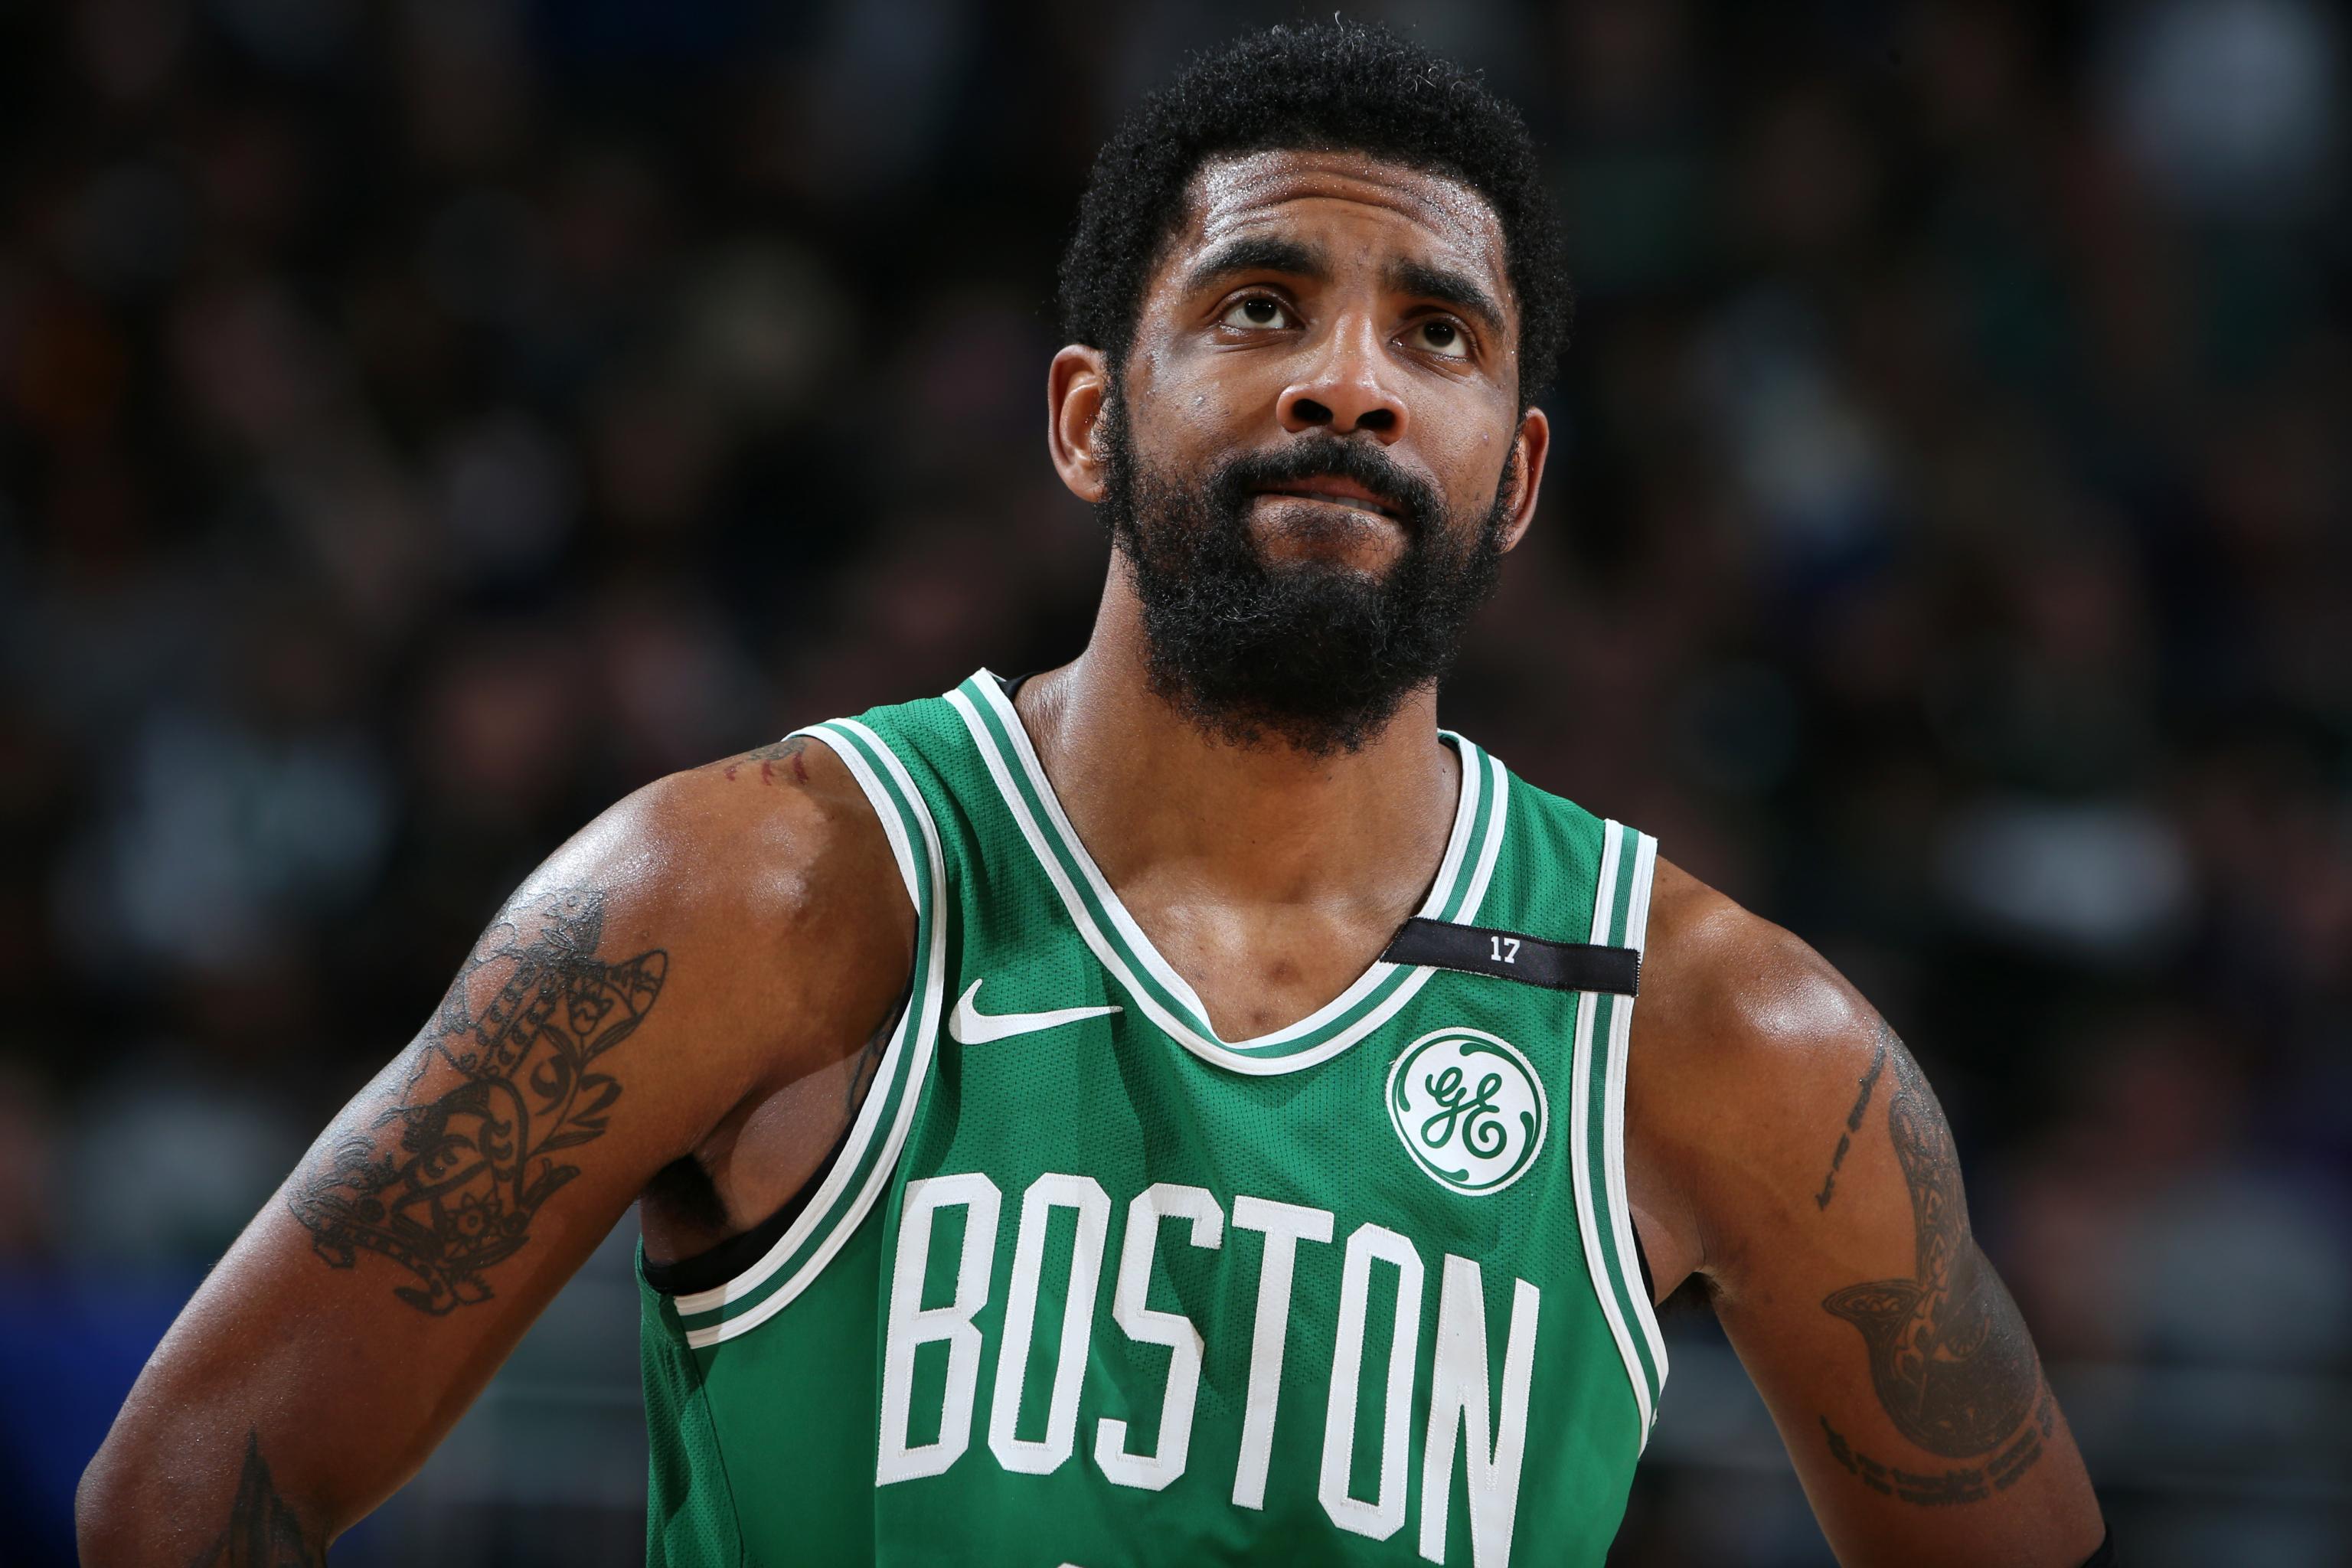 Meeting new Celtics star Irving